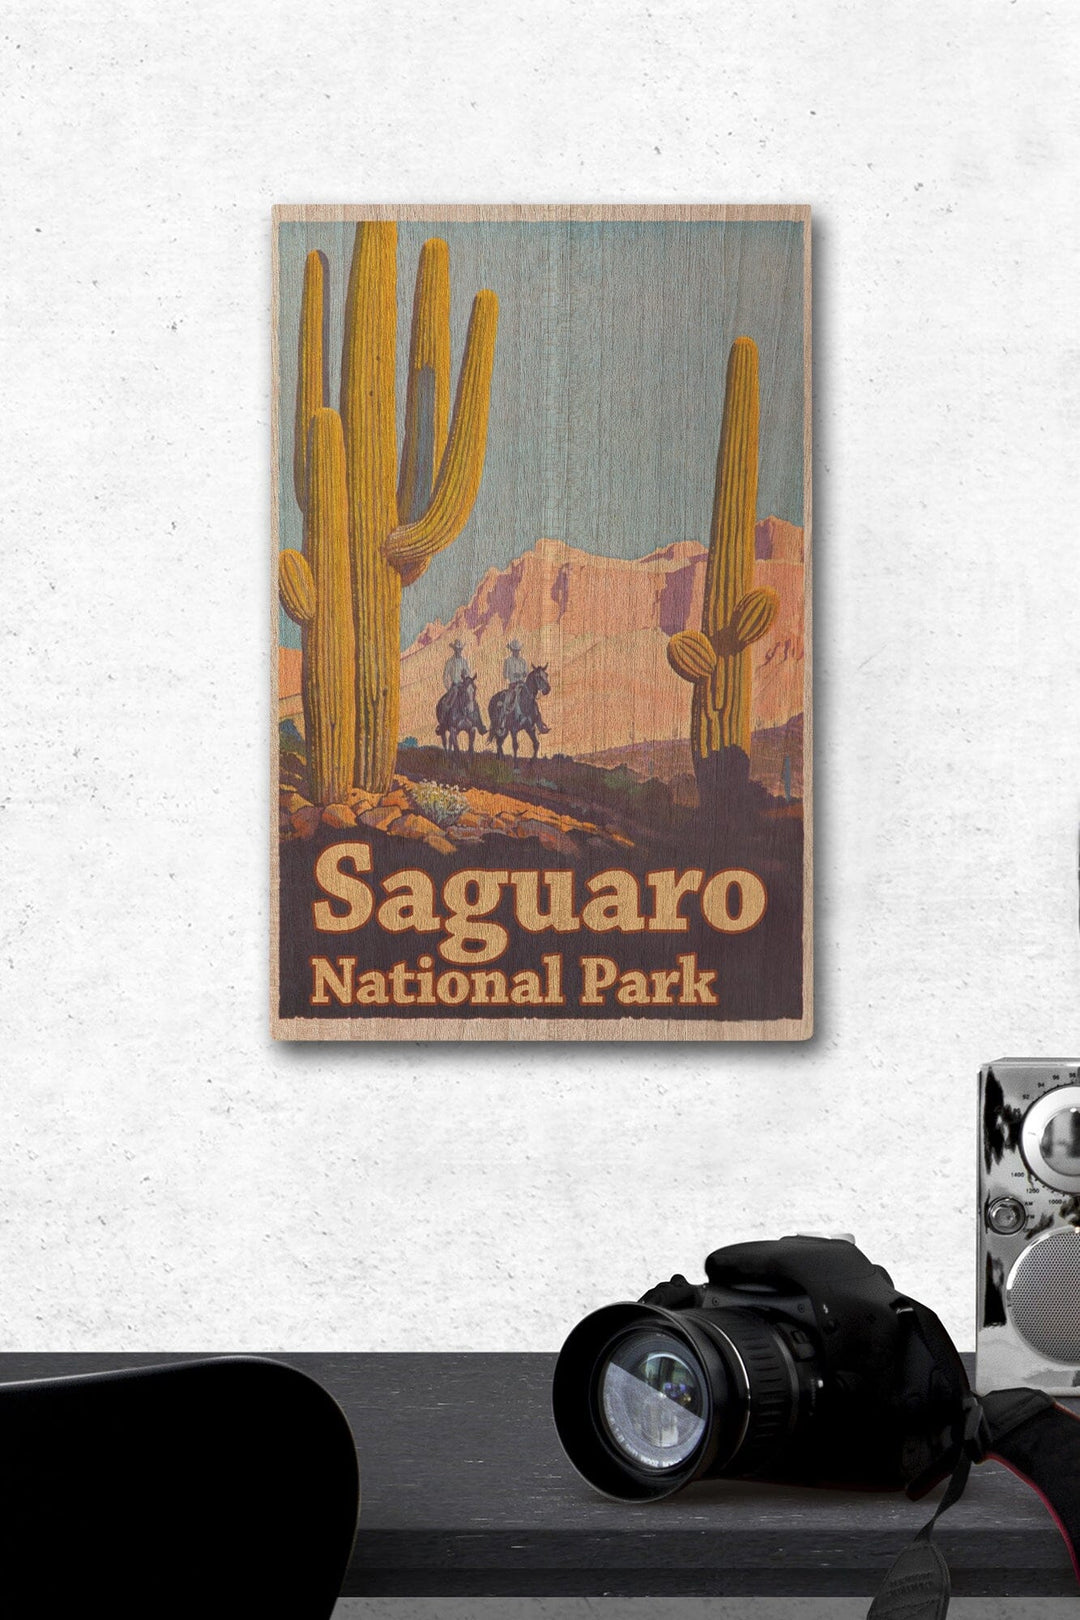 Saguaro National Park Vintage Poster, Wood Signs and Postcards Wood Lantern Press 12 x 18 Wood Gallery Print 